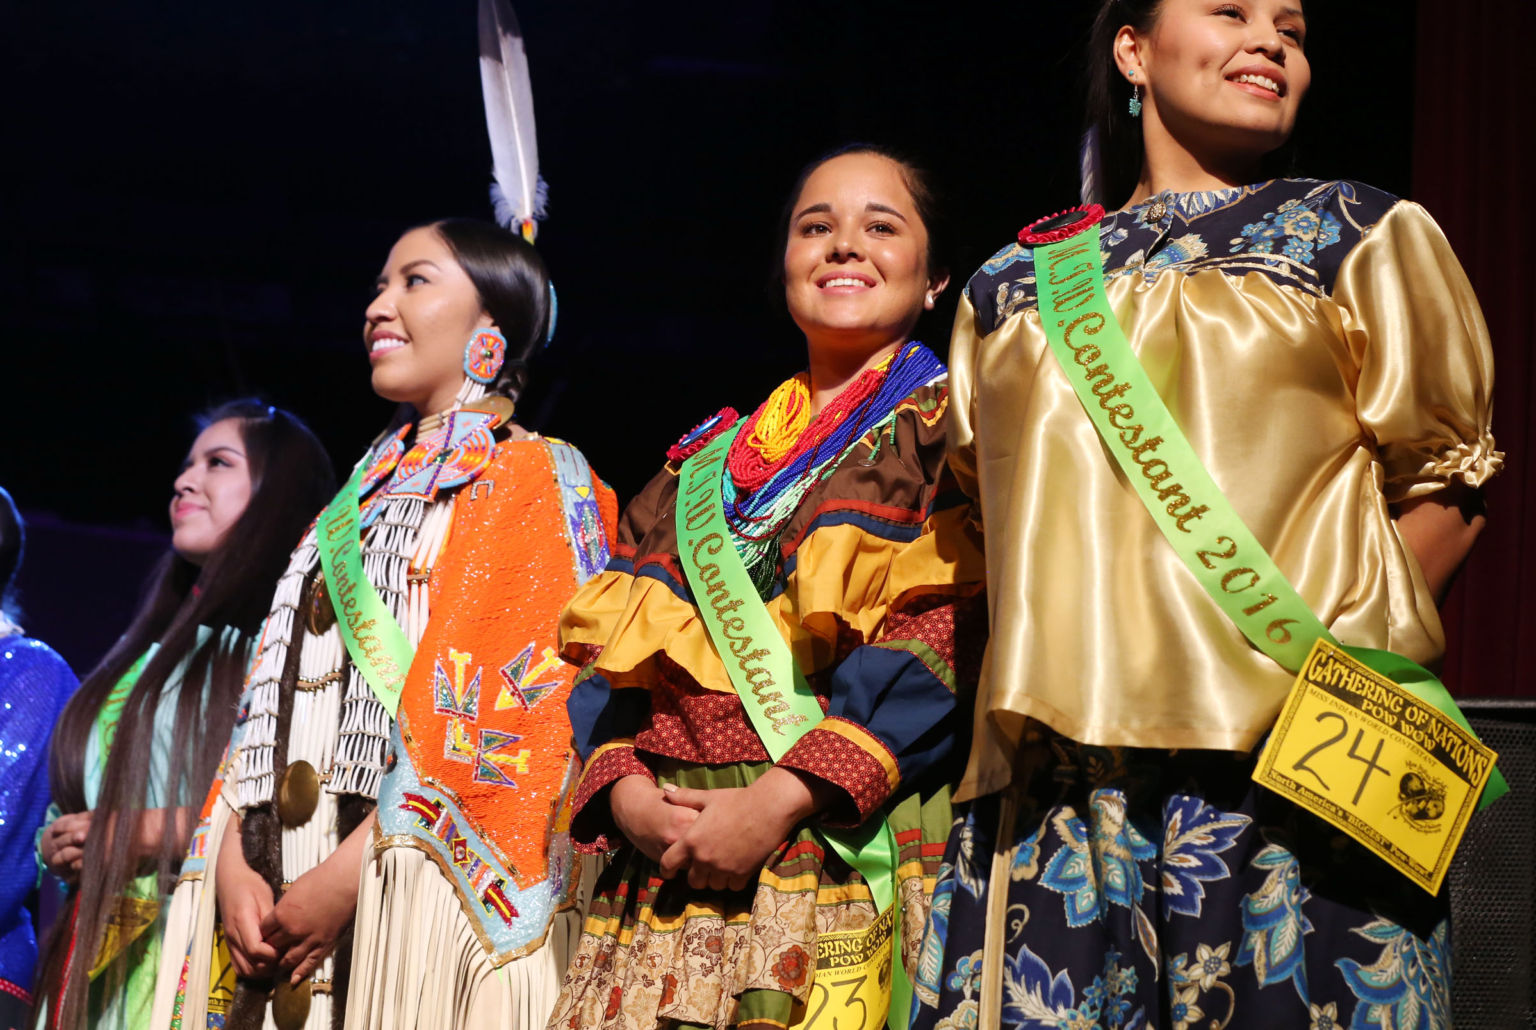 Destiny Nunez shines in Miss Indian World Pageant • The Seminole Tribune